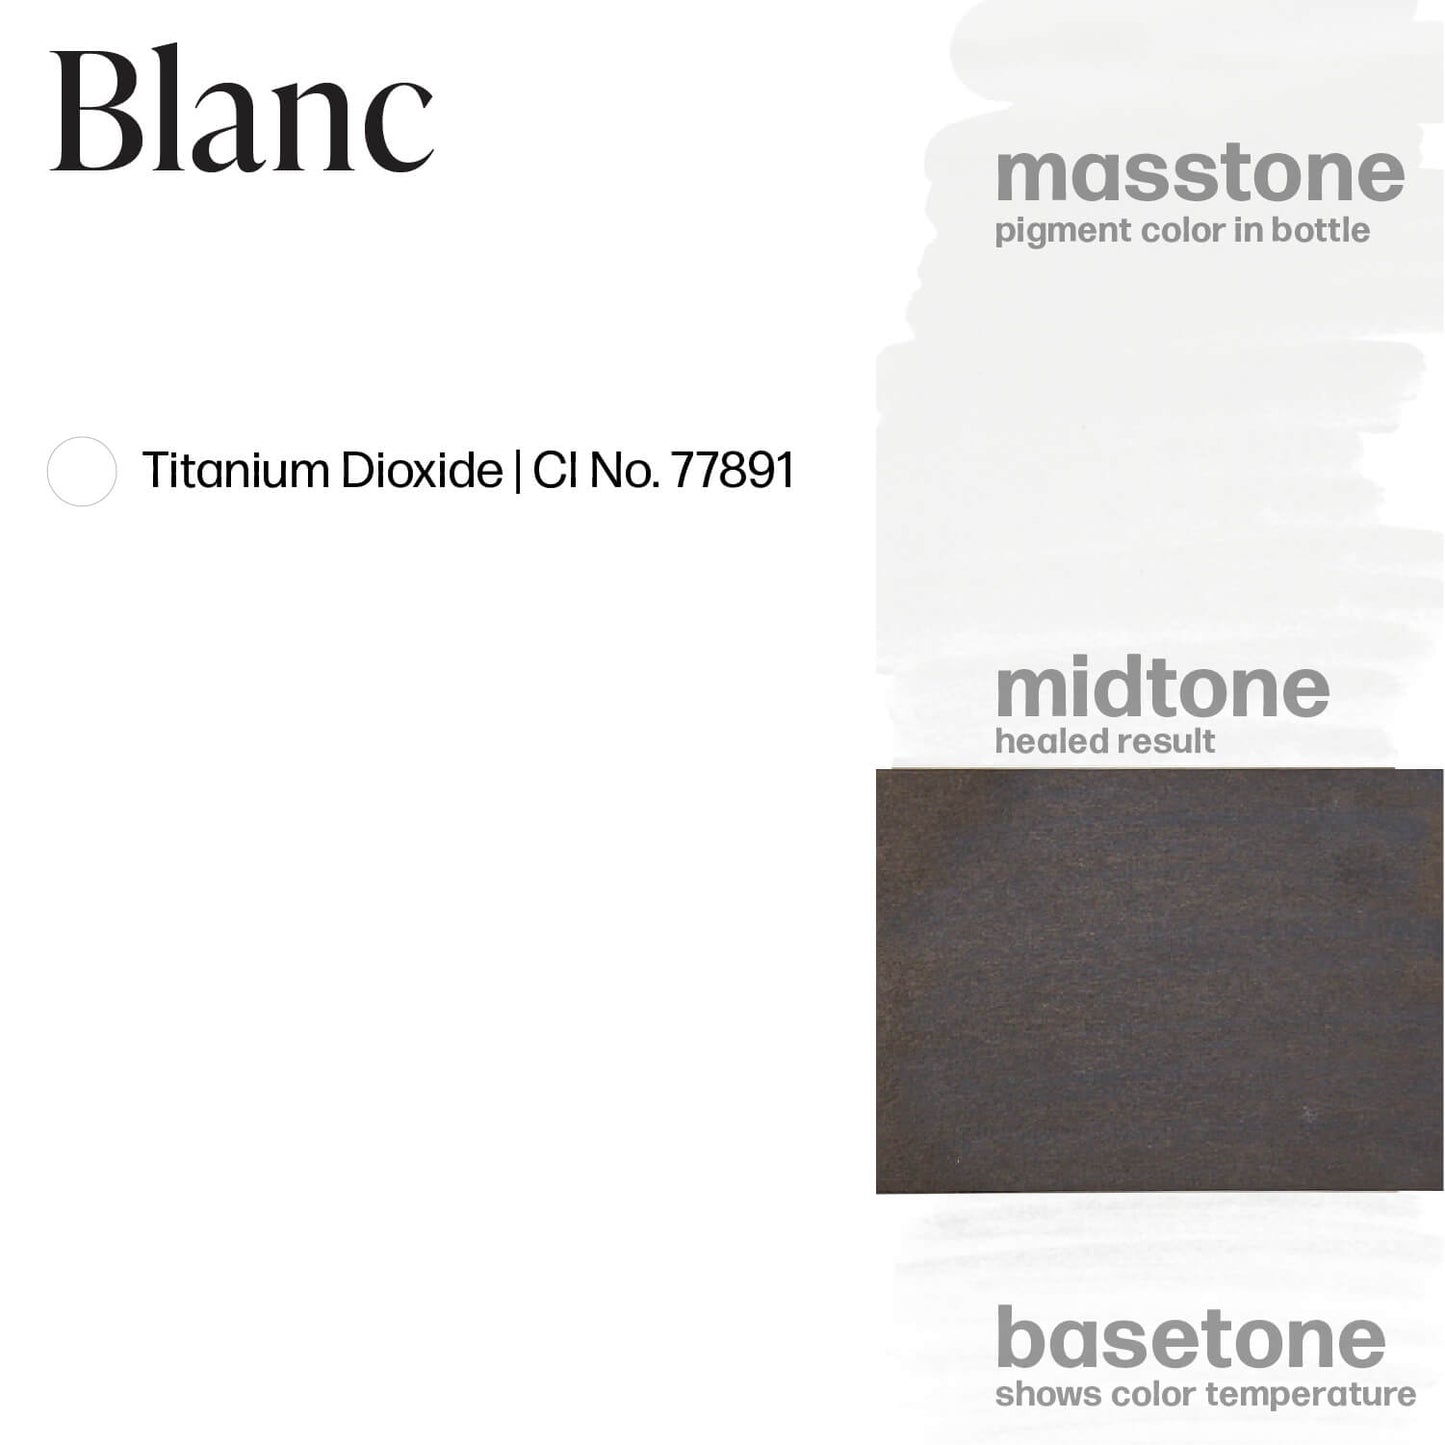 Perma Blend Blanc Masstone Midtone Basetone